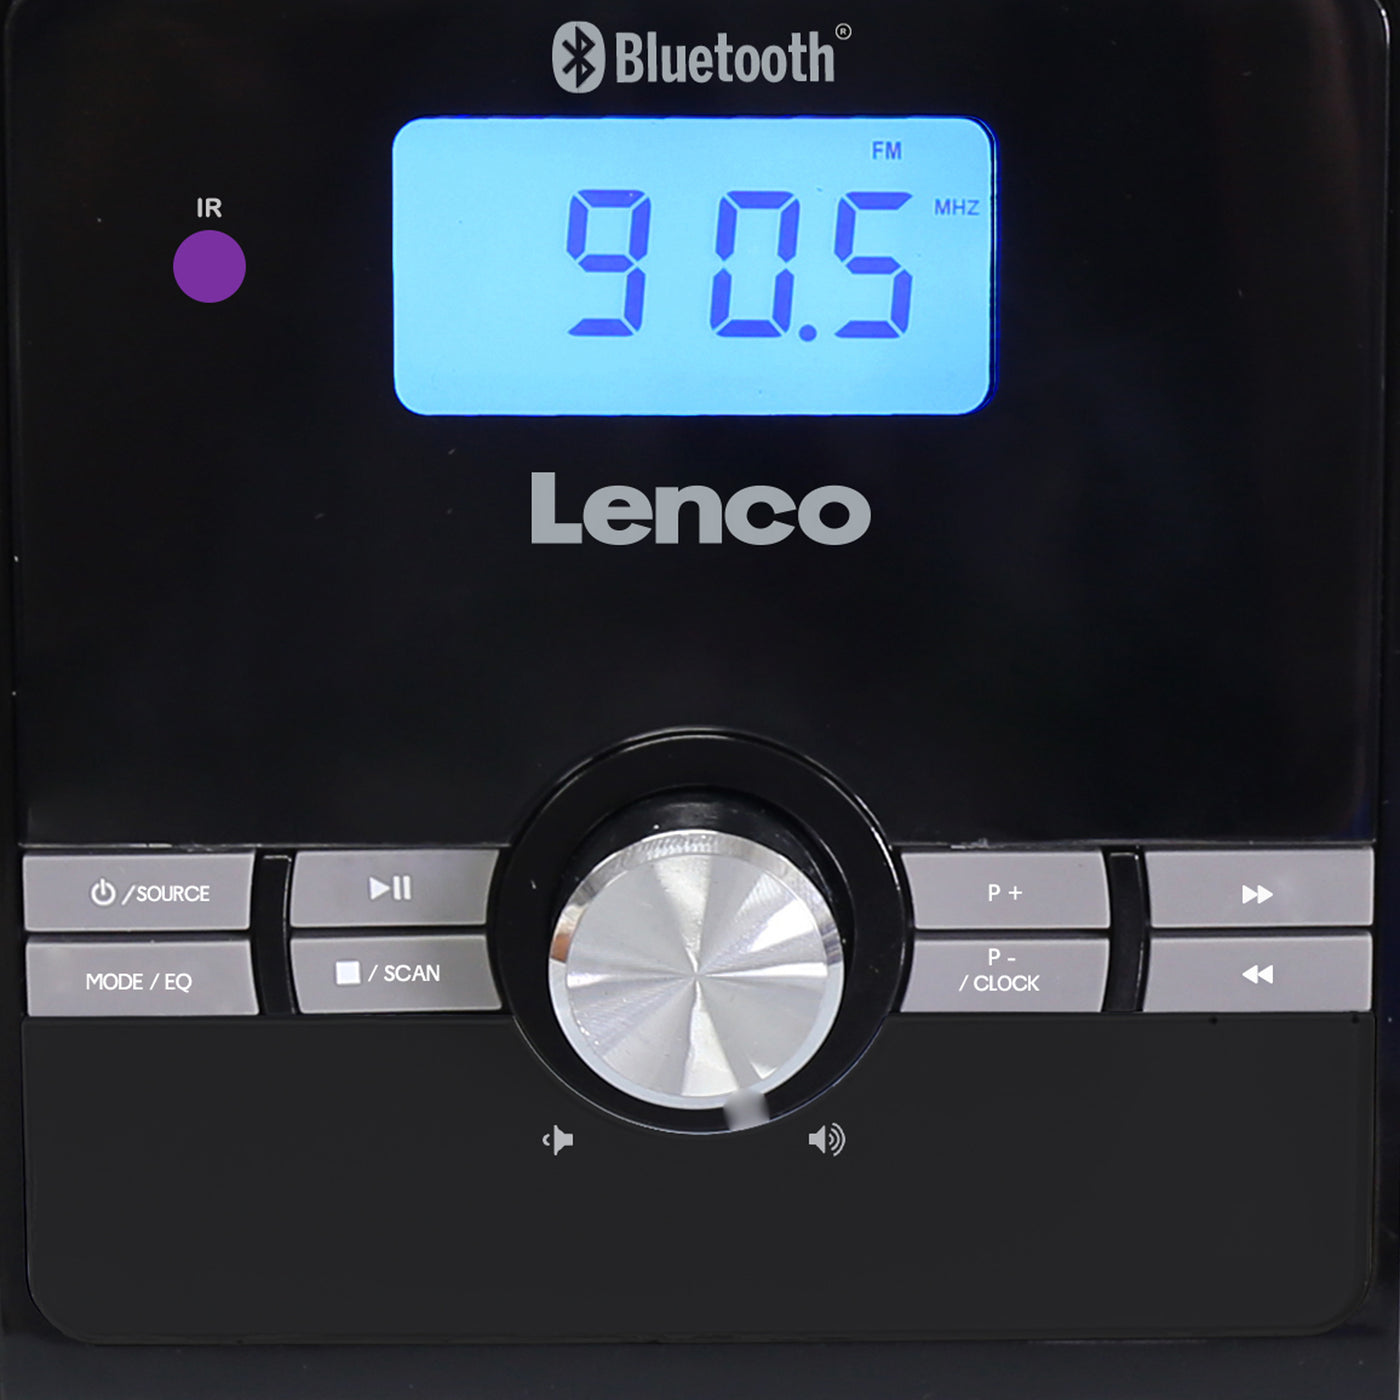 LENCO MC-030BK - Micro set with CD/ MP3 player